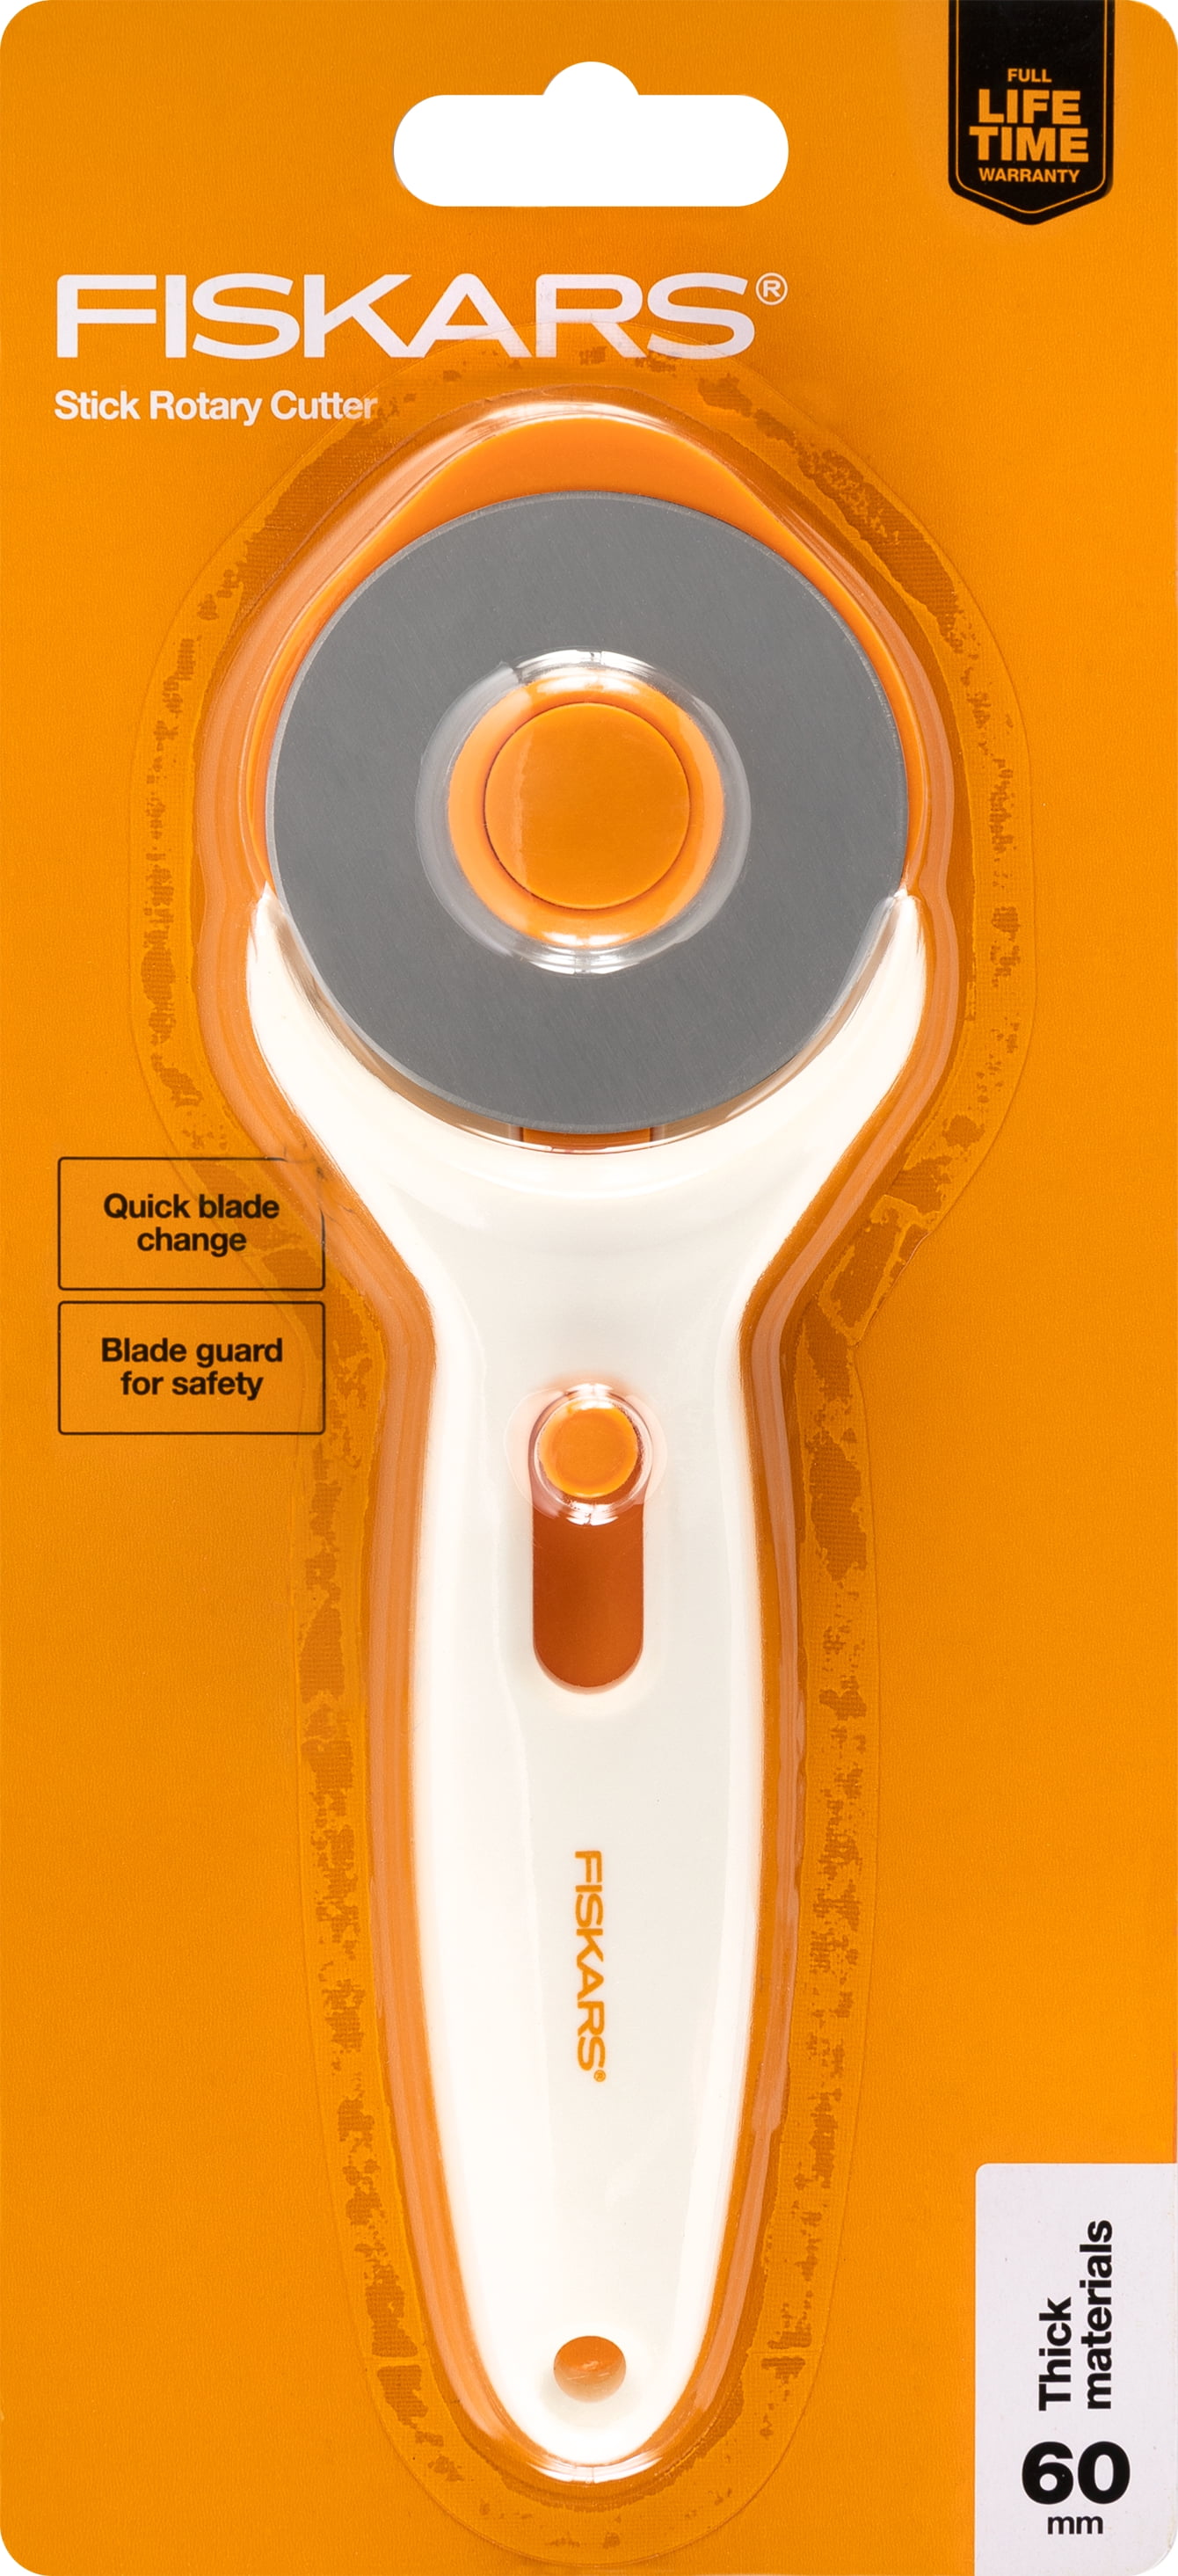 Fiskars: 60mm single replacement blade